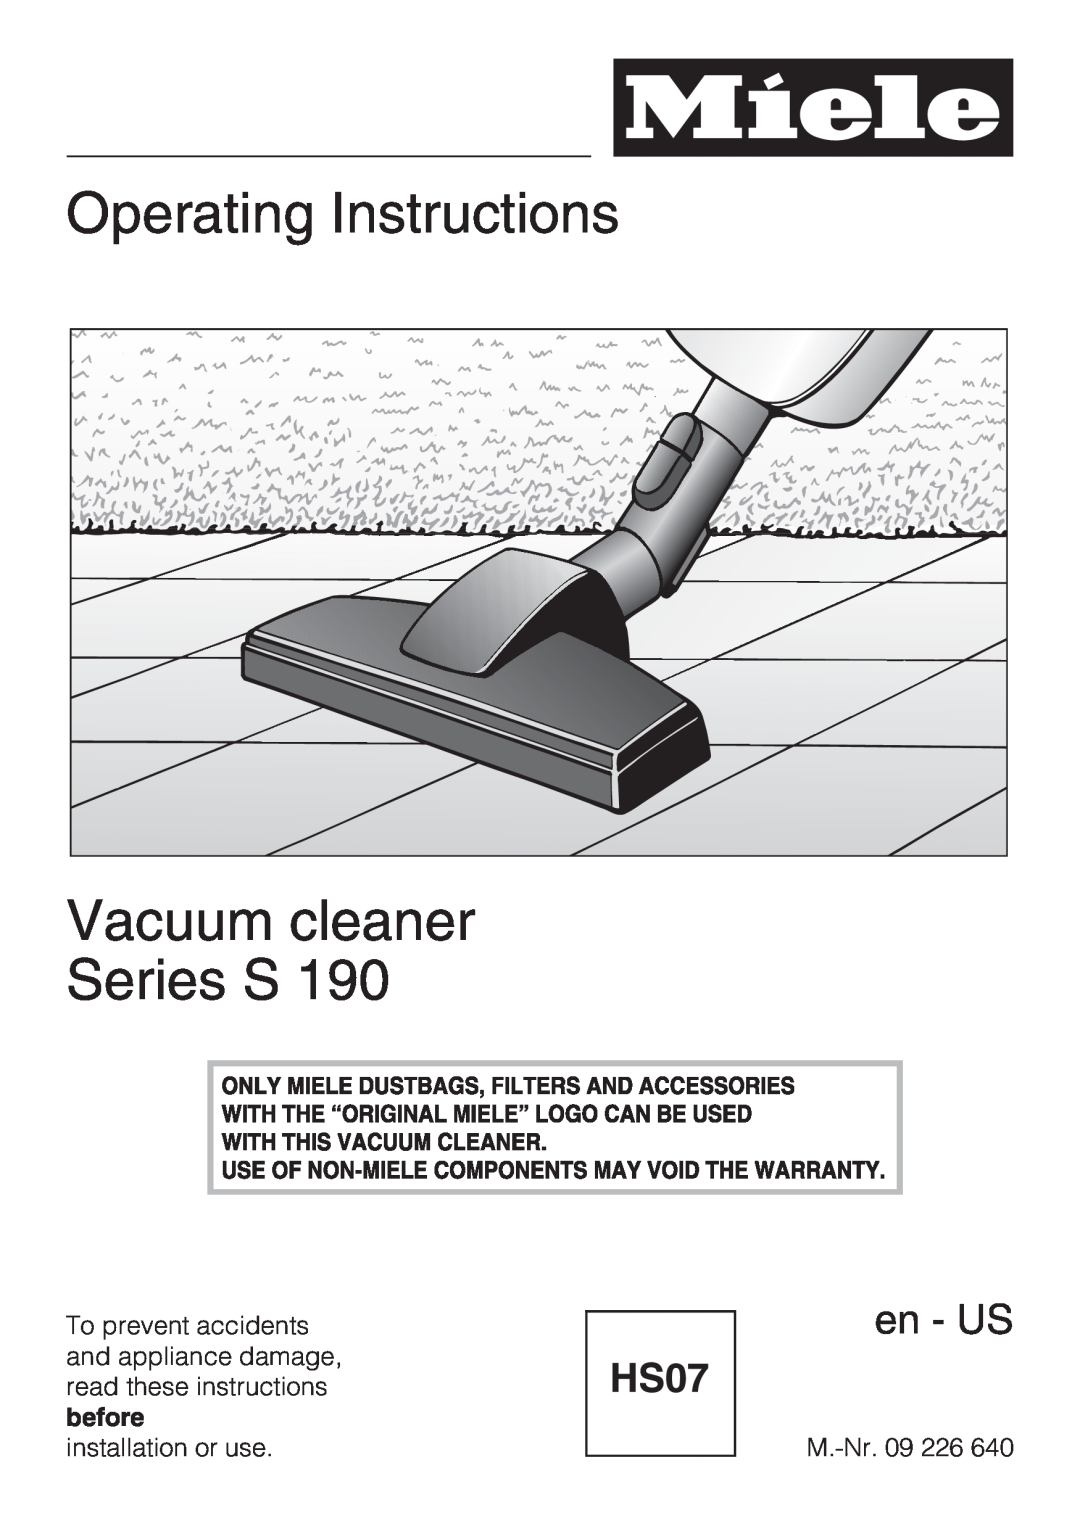 Miele S 190 manual Operating Instructions Vacuum cleaner Series S, en - US 